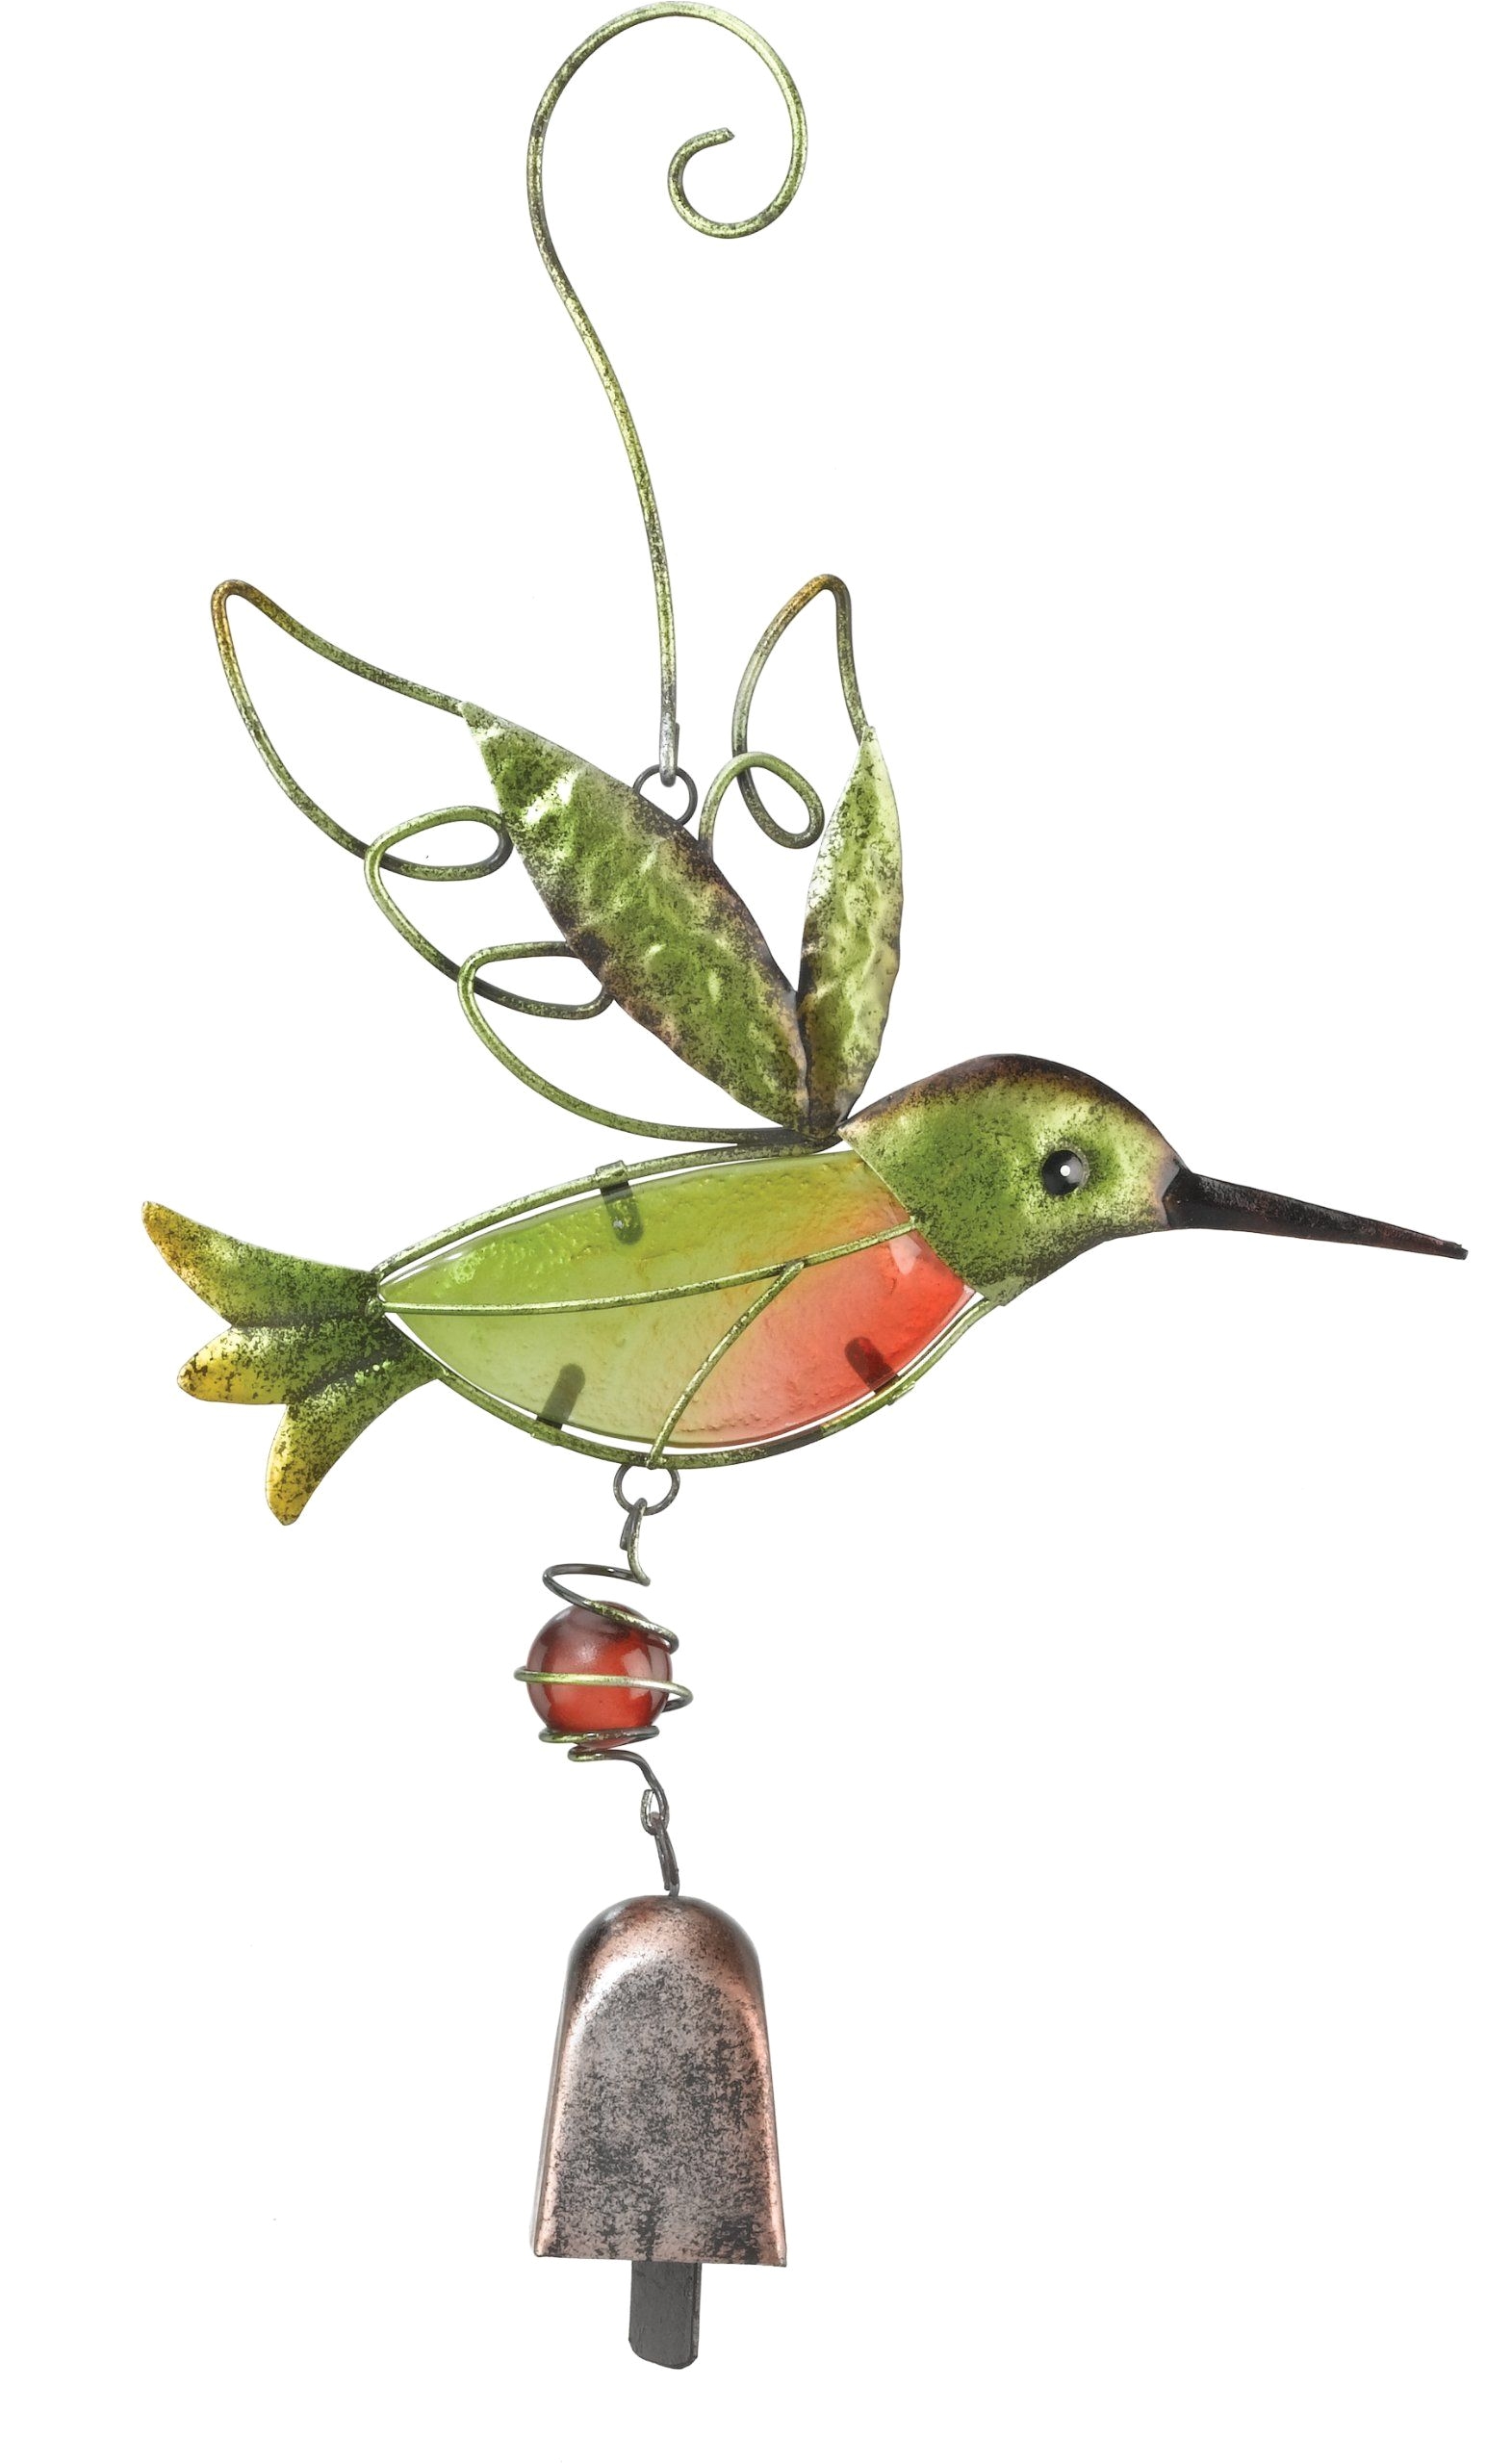 amazon com regal art gift hummingbird ornament with bell garden stakes